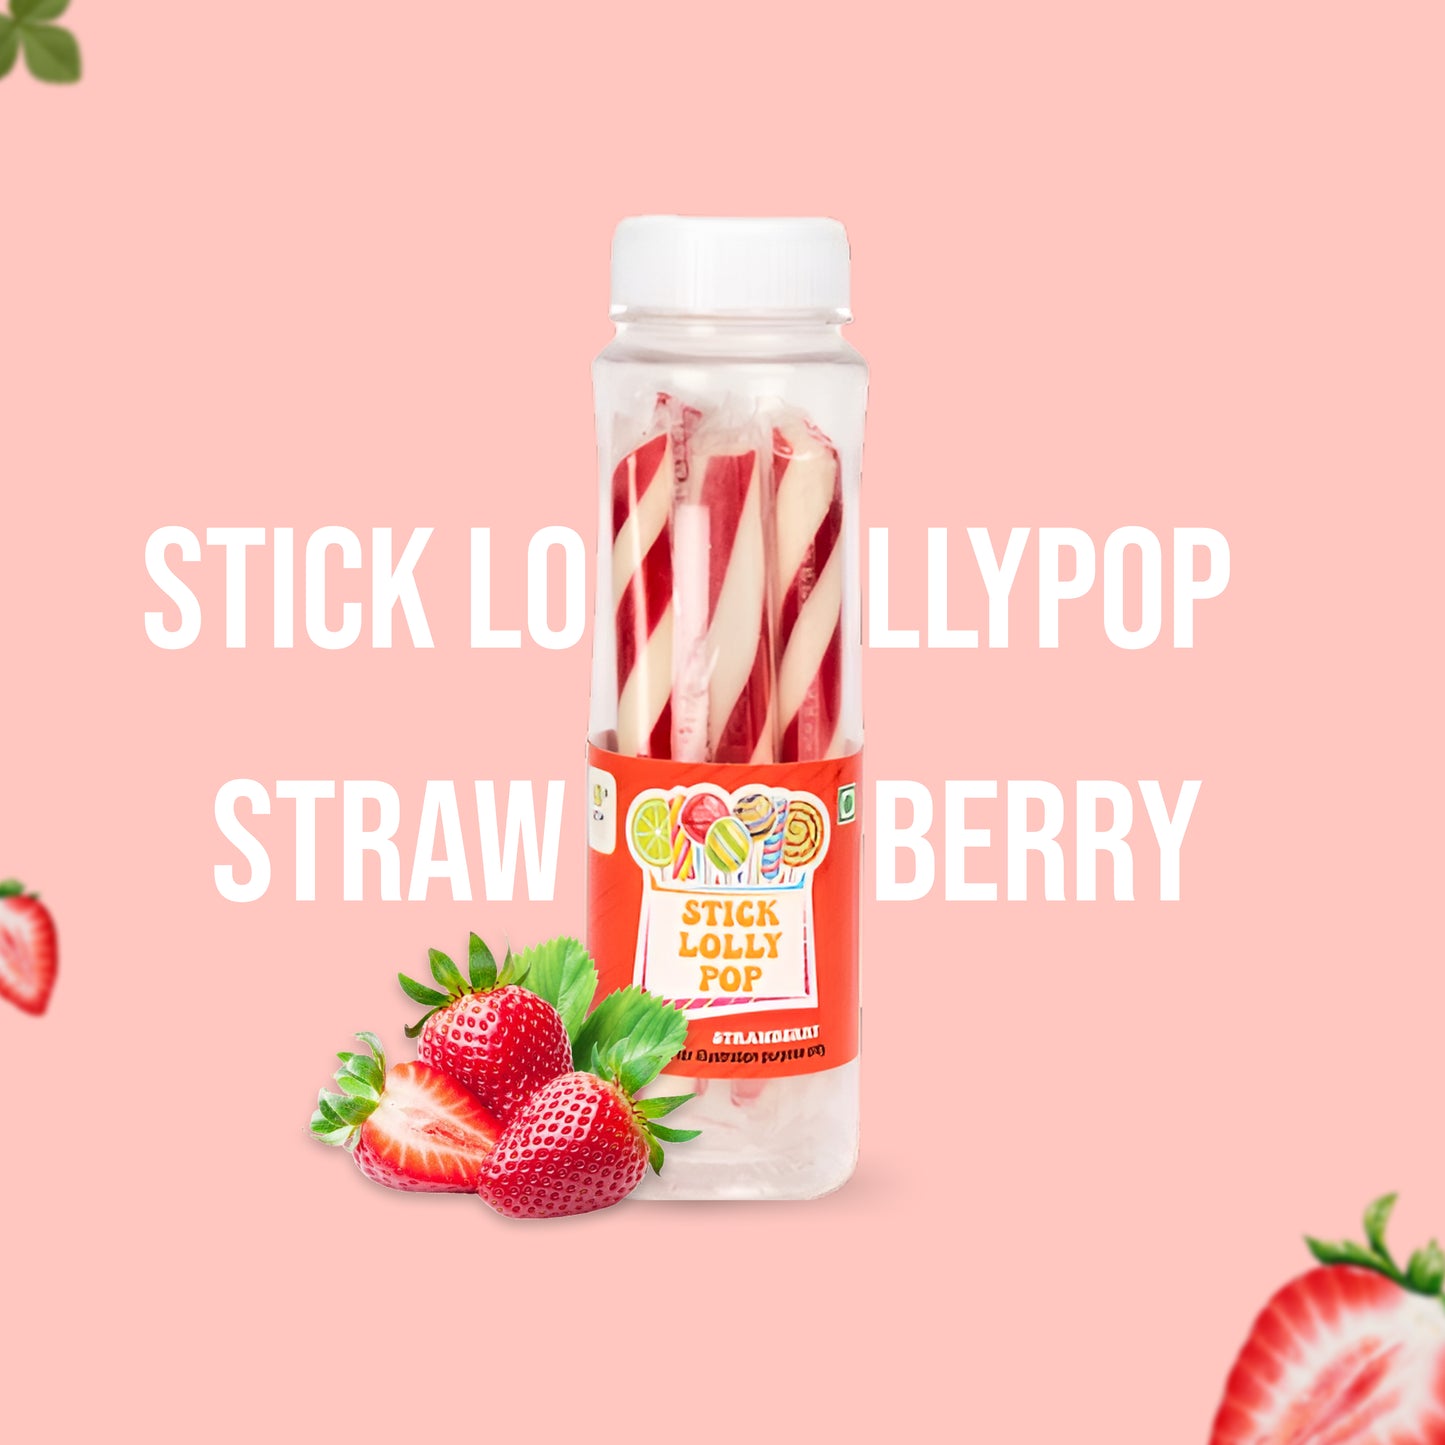 Stick Lollypop Strawberry